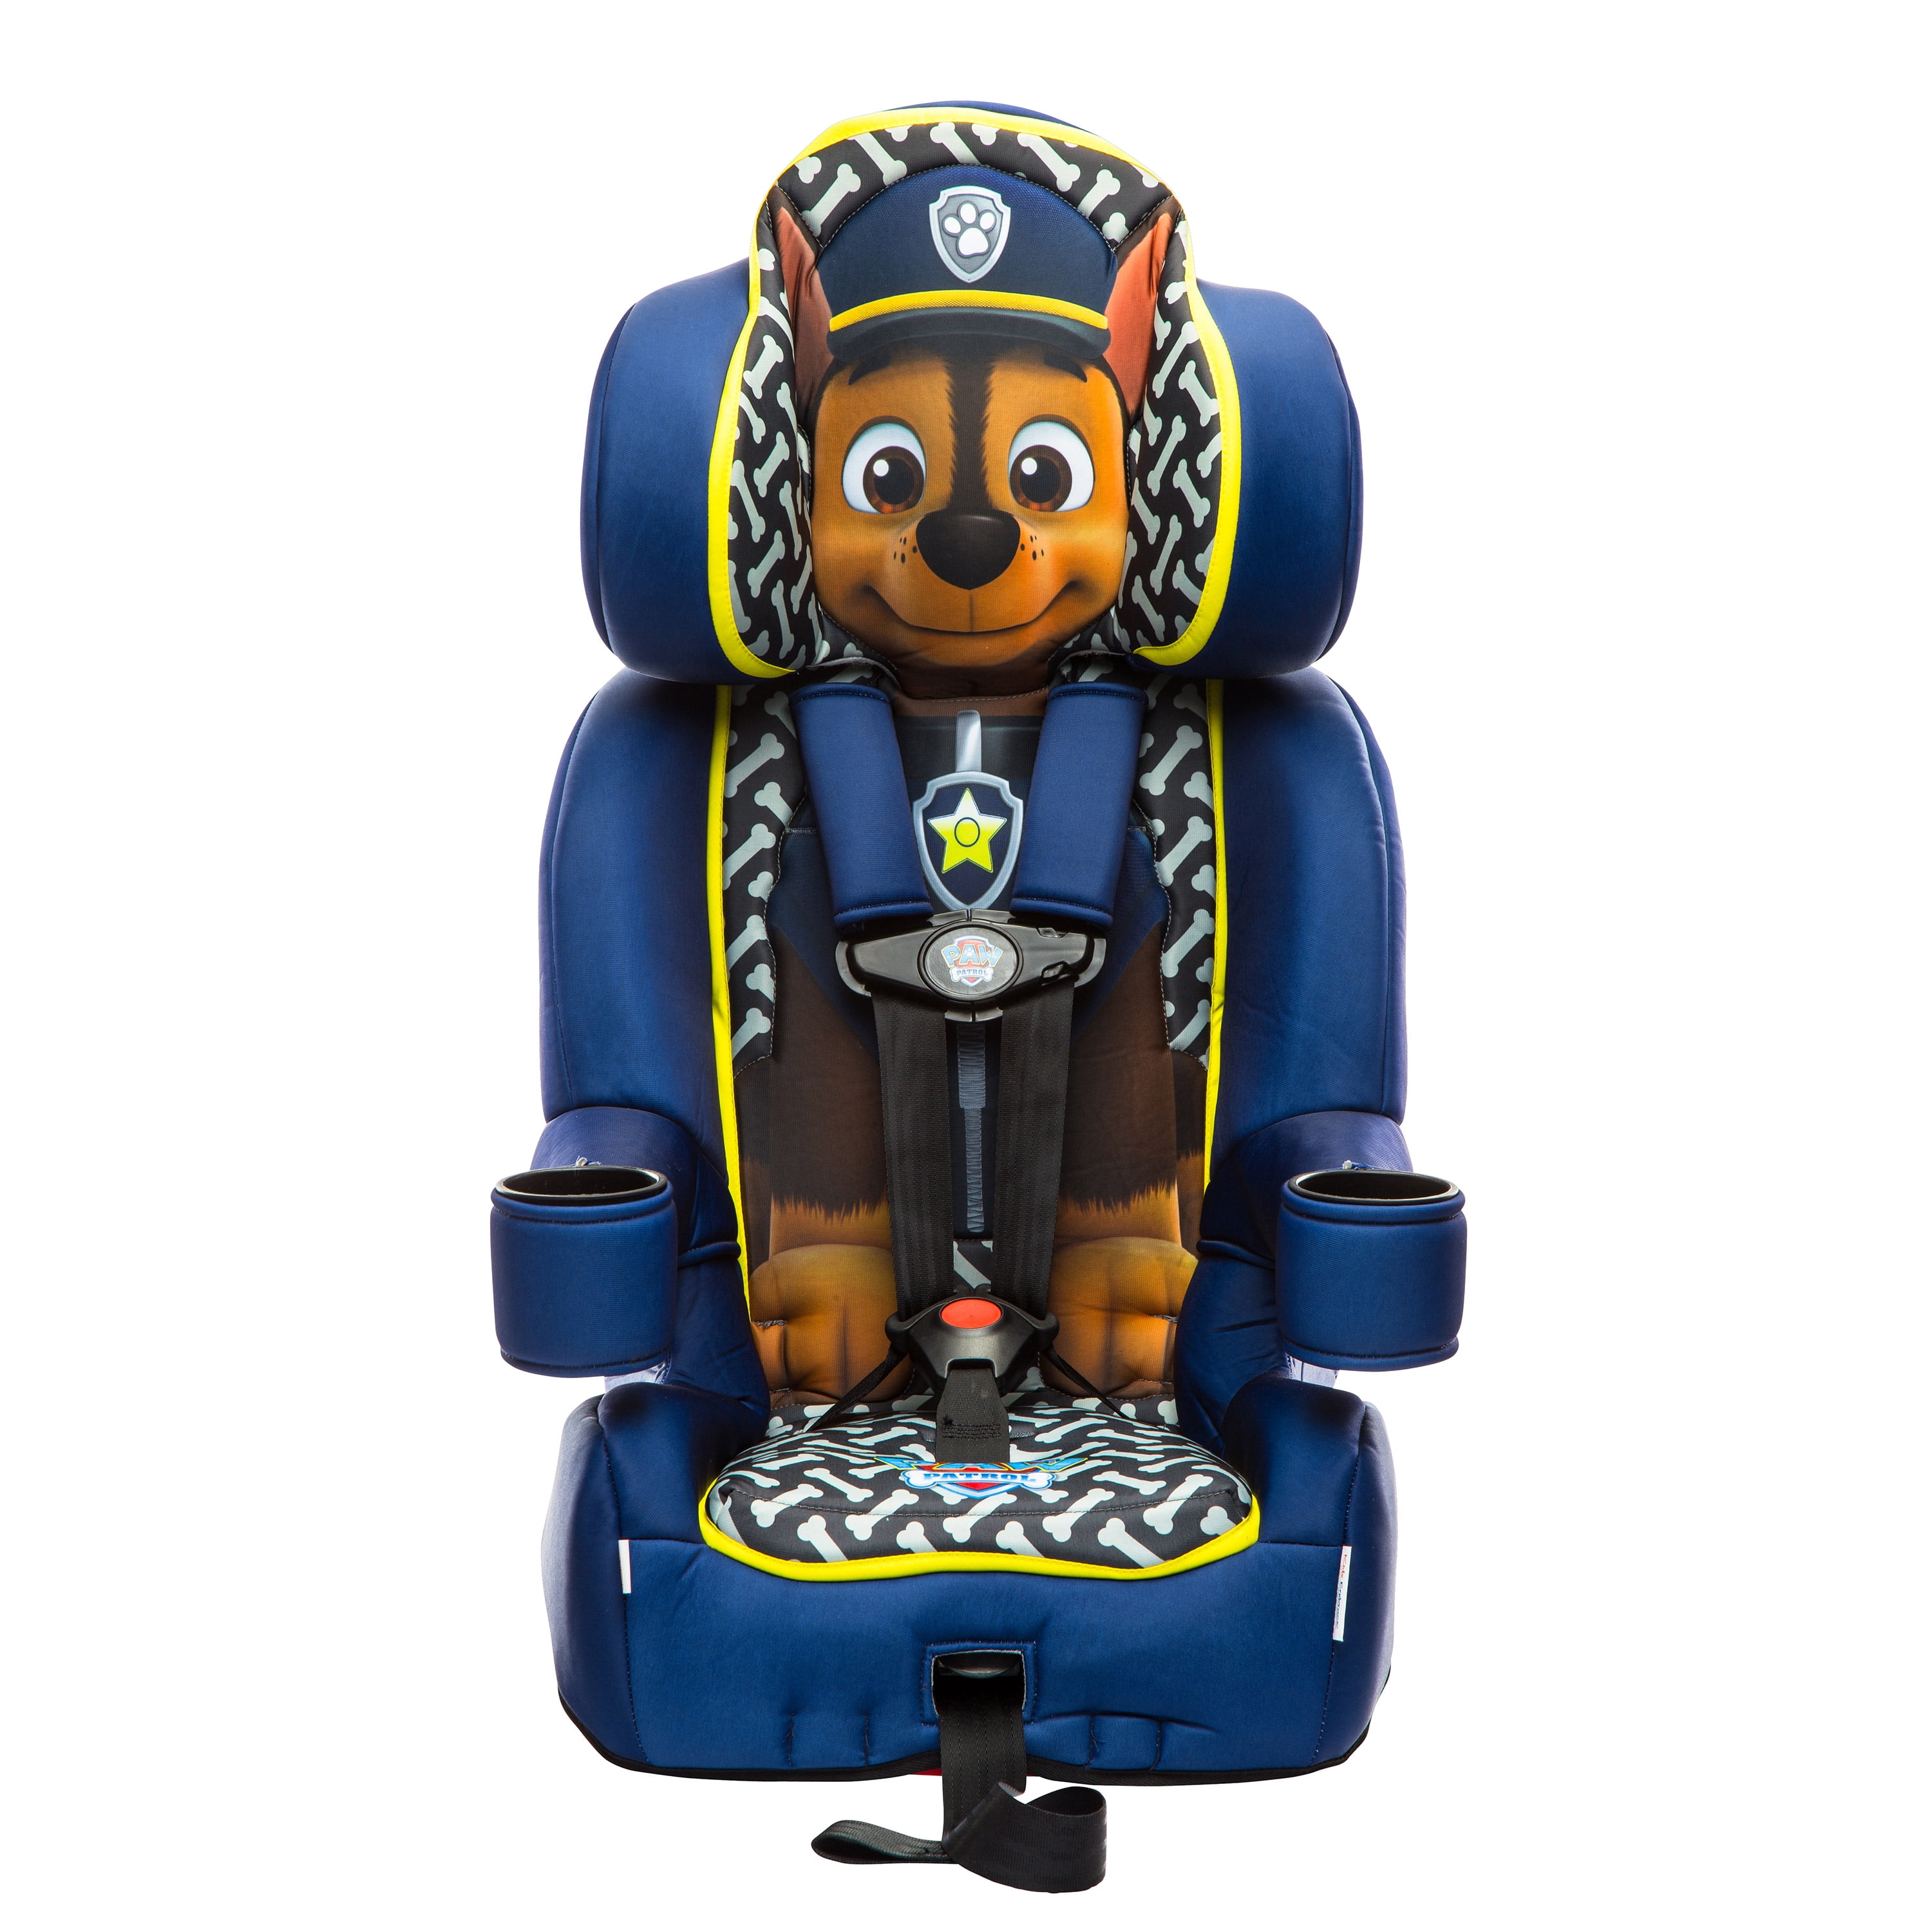 KidsEmbrace Booster Car Seat, Nickelodeon Paw Patrol Walmart.com